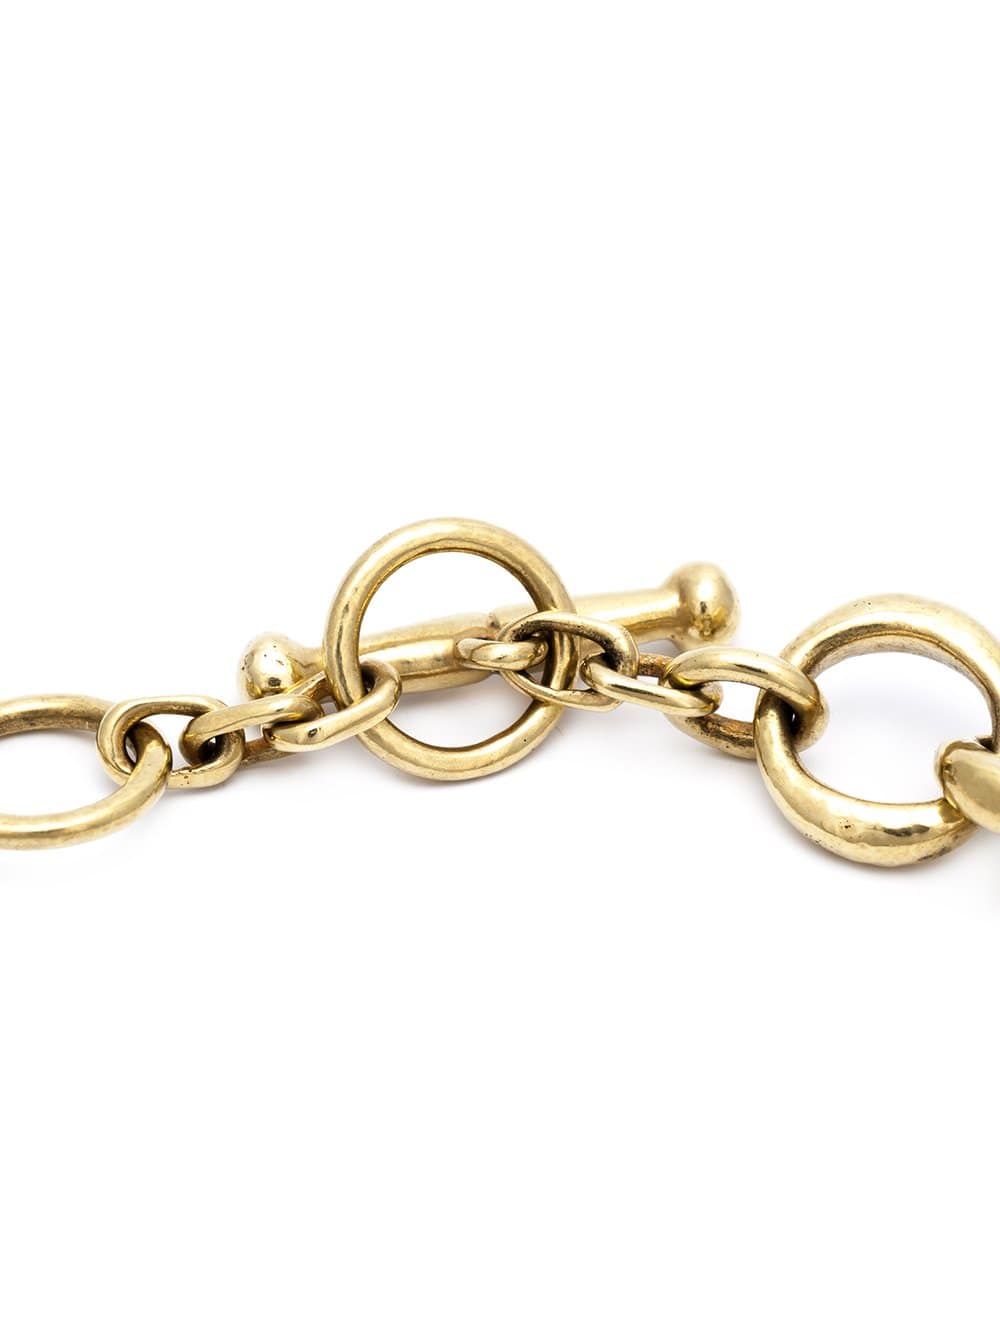 VAUBEL-Chunky Oval Link Necklace-GOLD